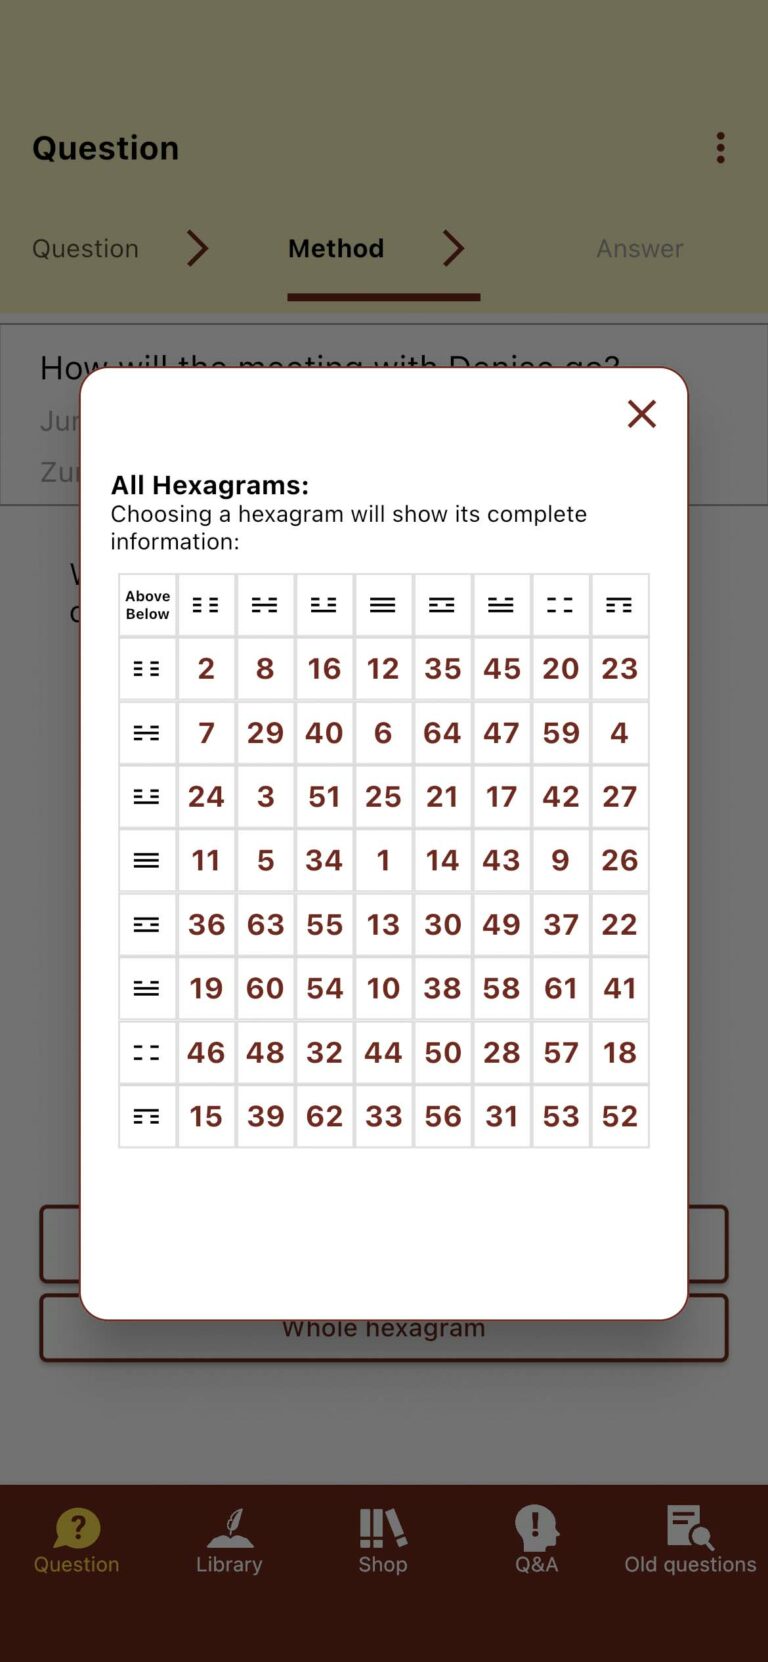 All Hexagrams